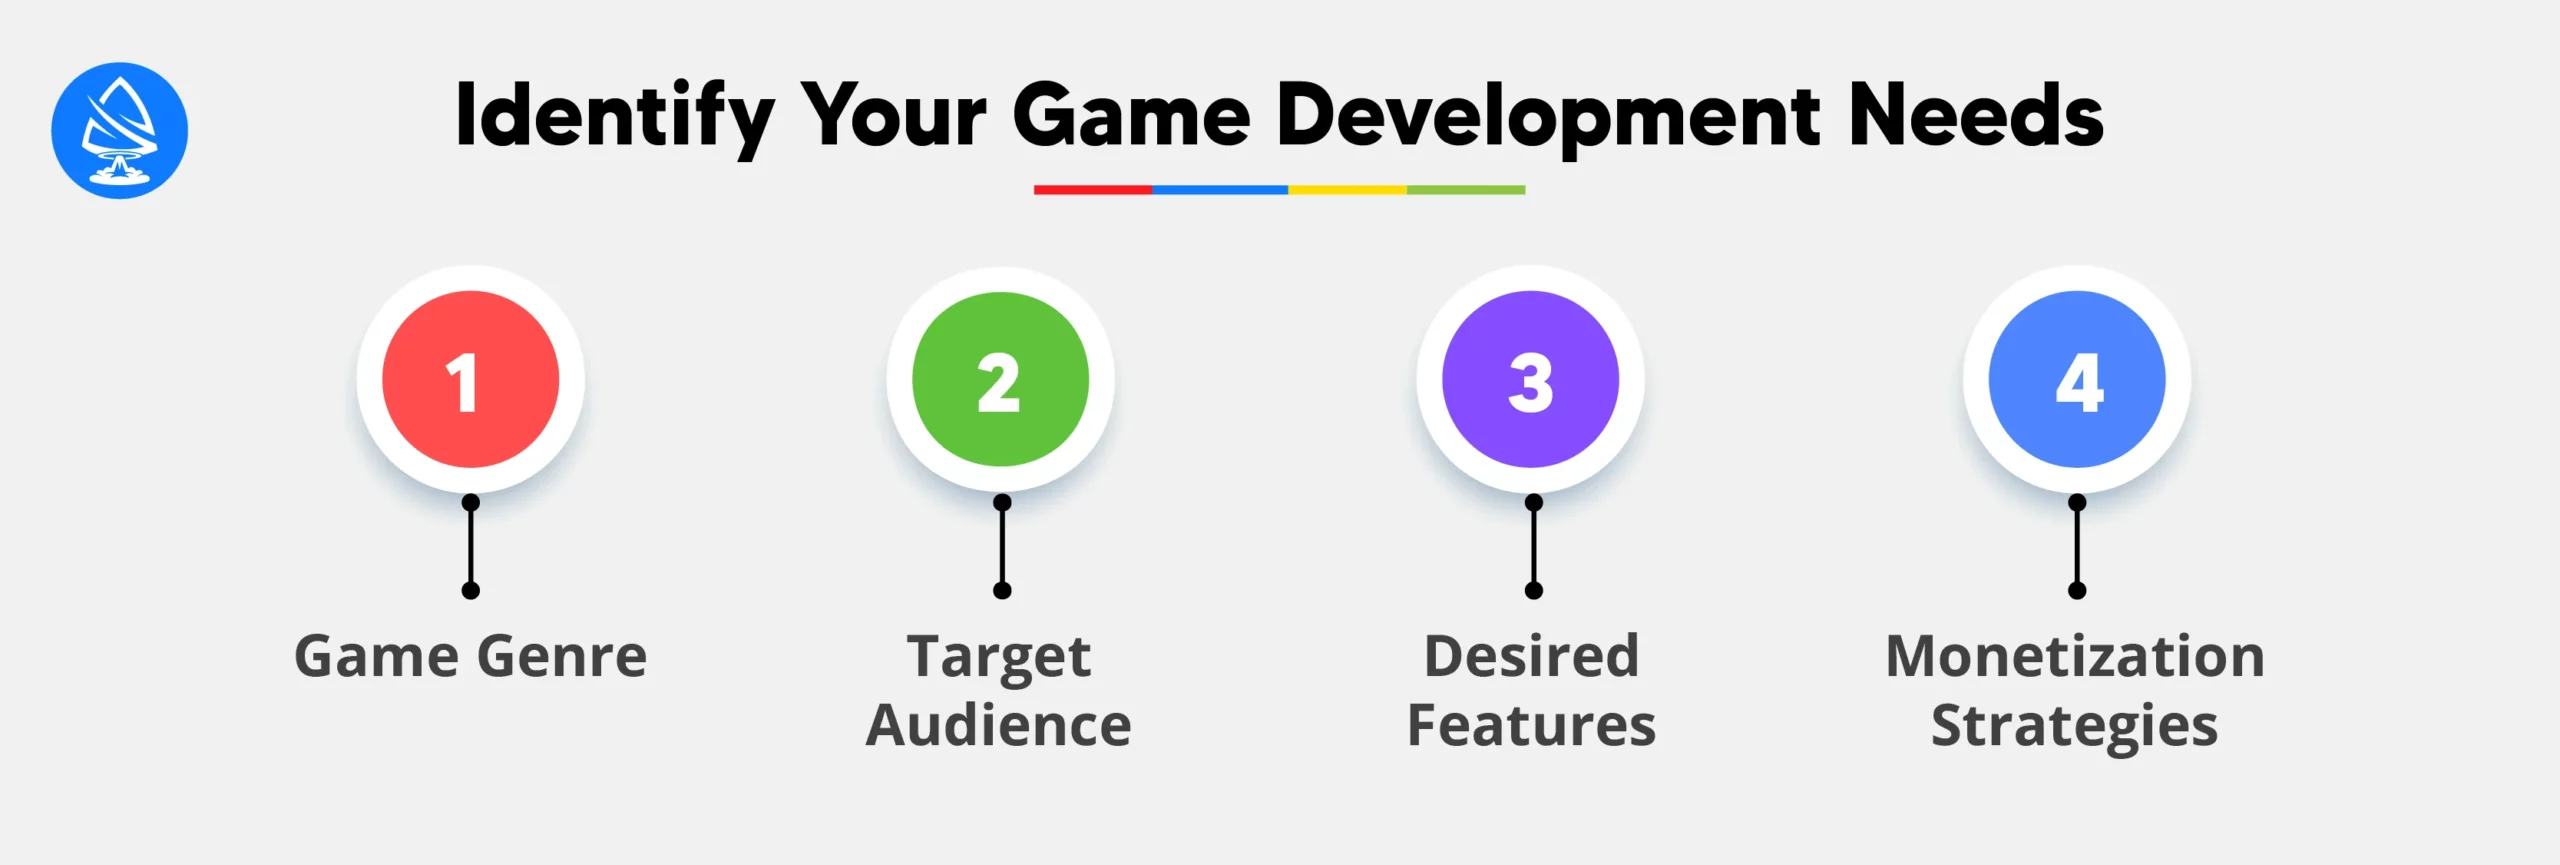 Identify Your Game Development Needs